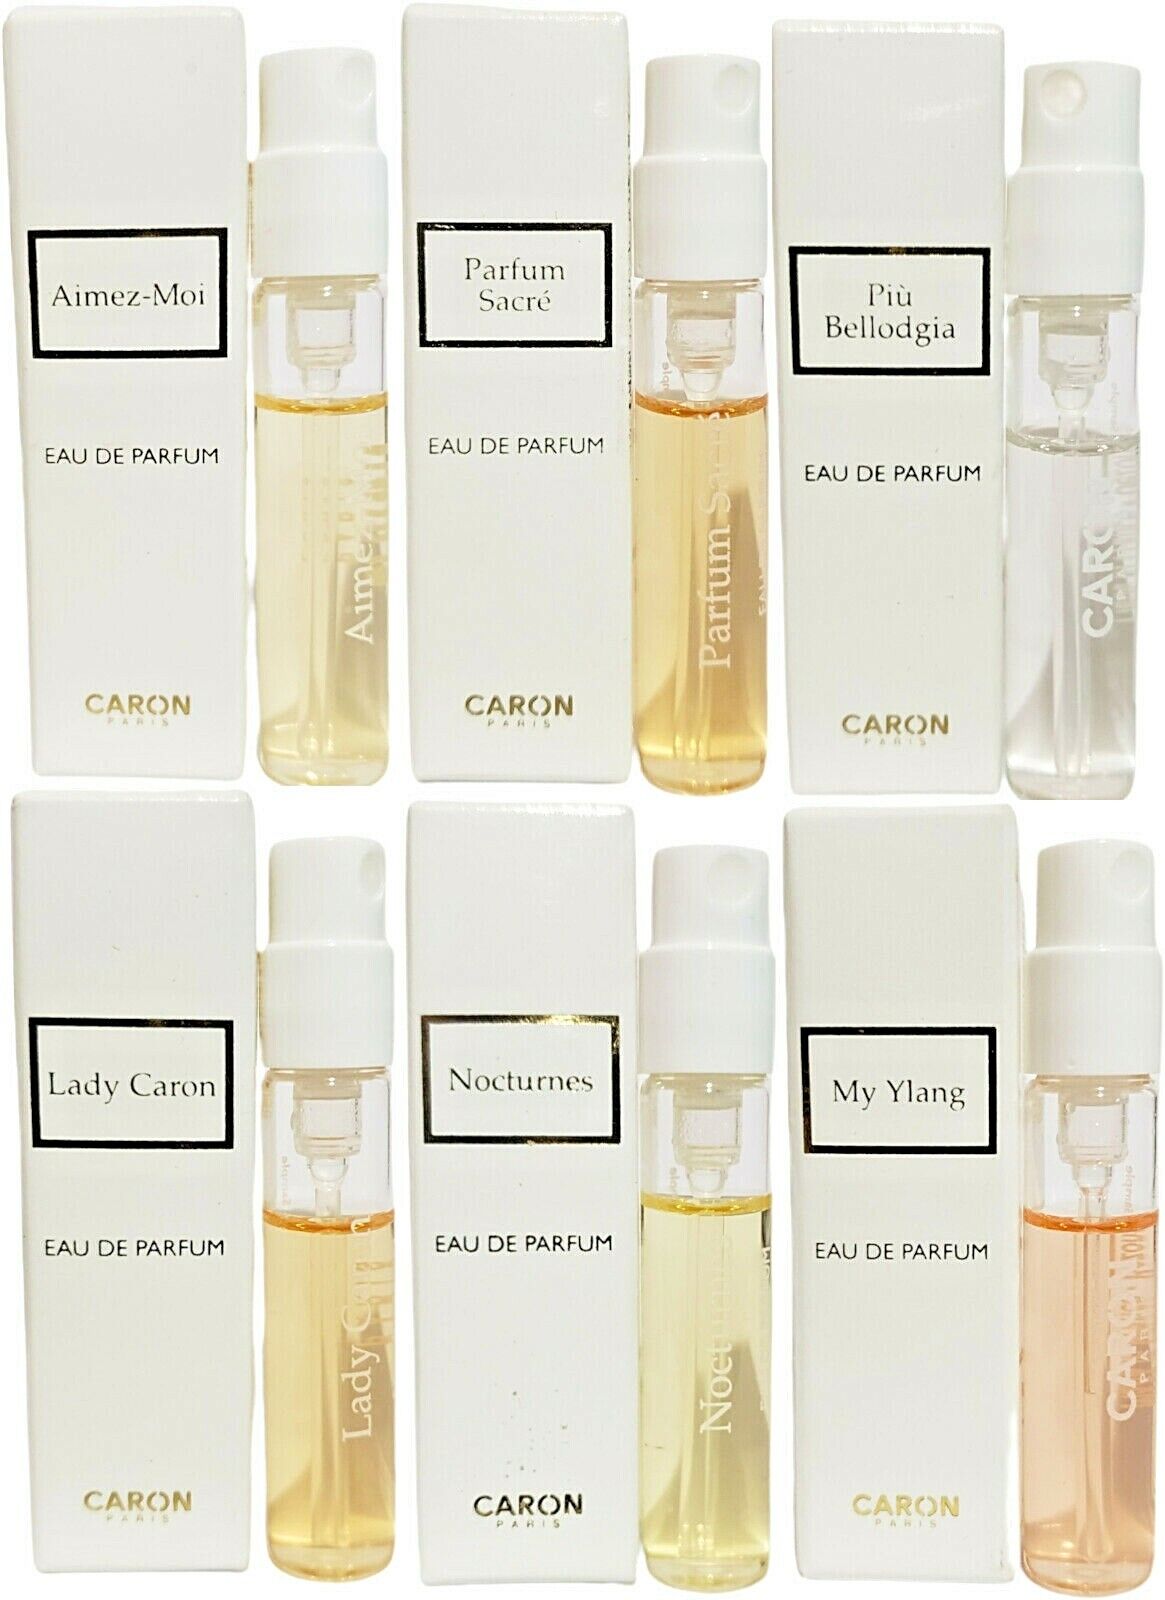 Caron Eau de Parfum Lot of 6 Sample Sprays Aimez-Moi My Ylang Piu Bellodgia 